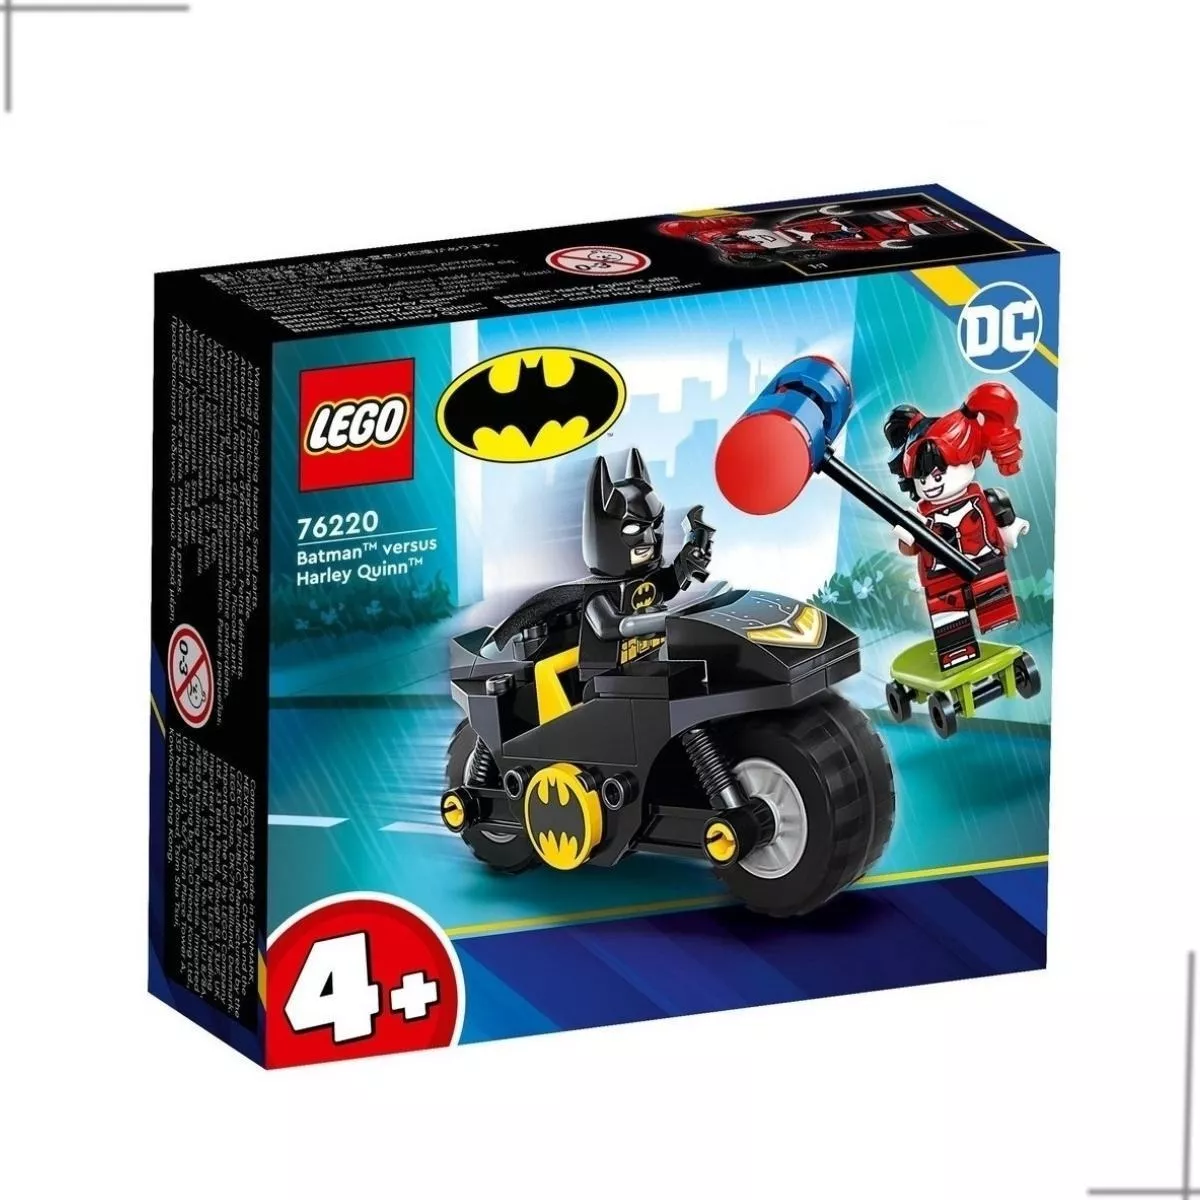 Brinquedo Lego Dc 76220 Batman Contra Harley Quinn 42 Pecas